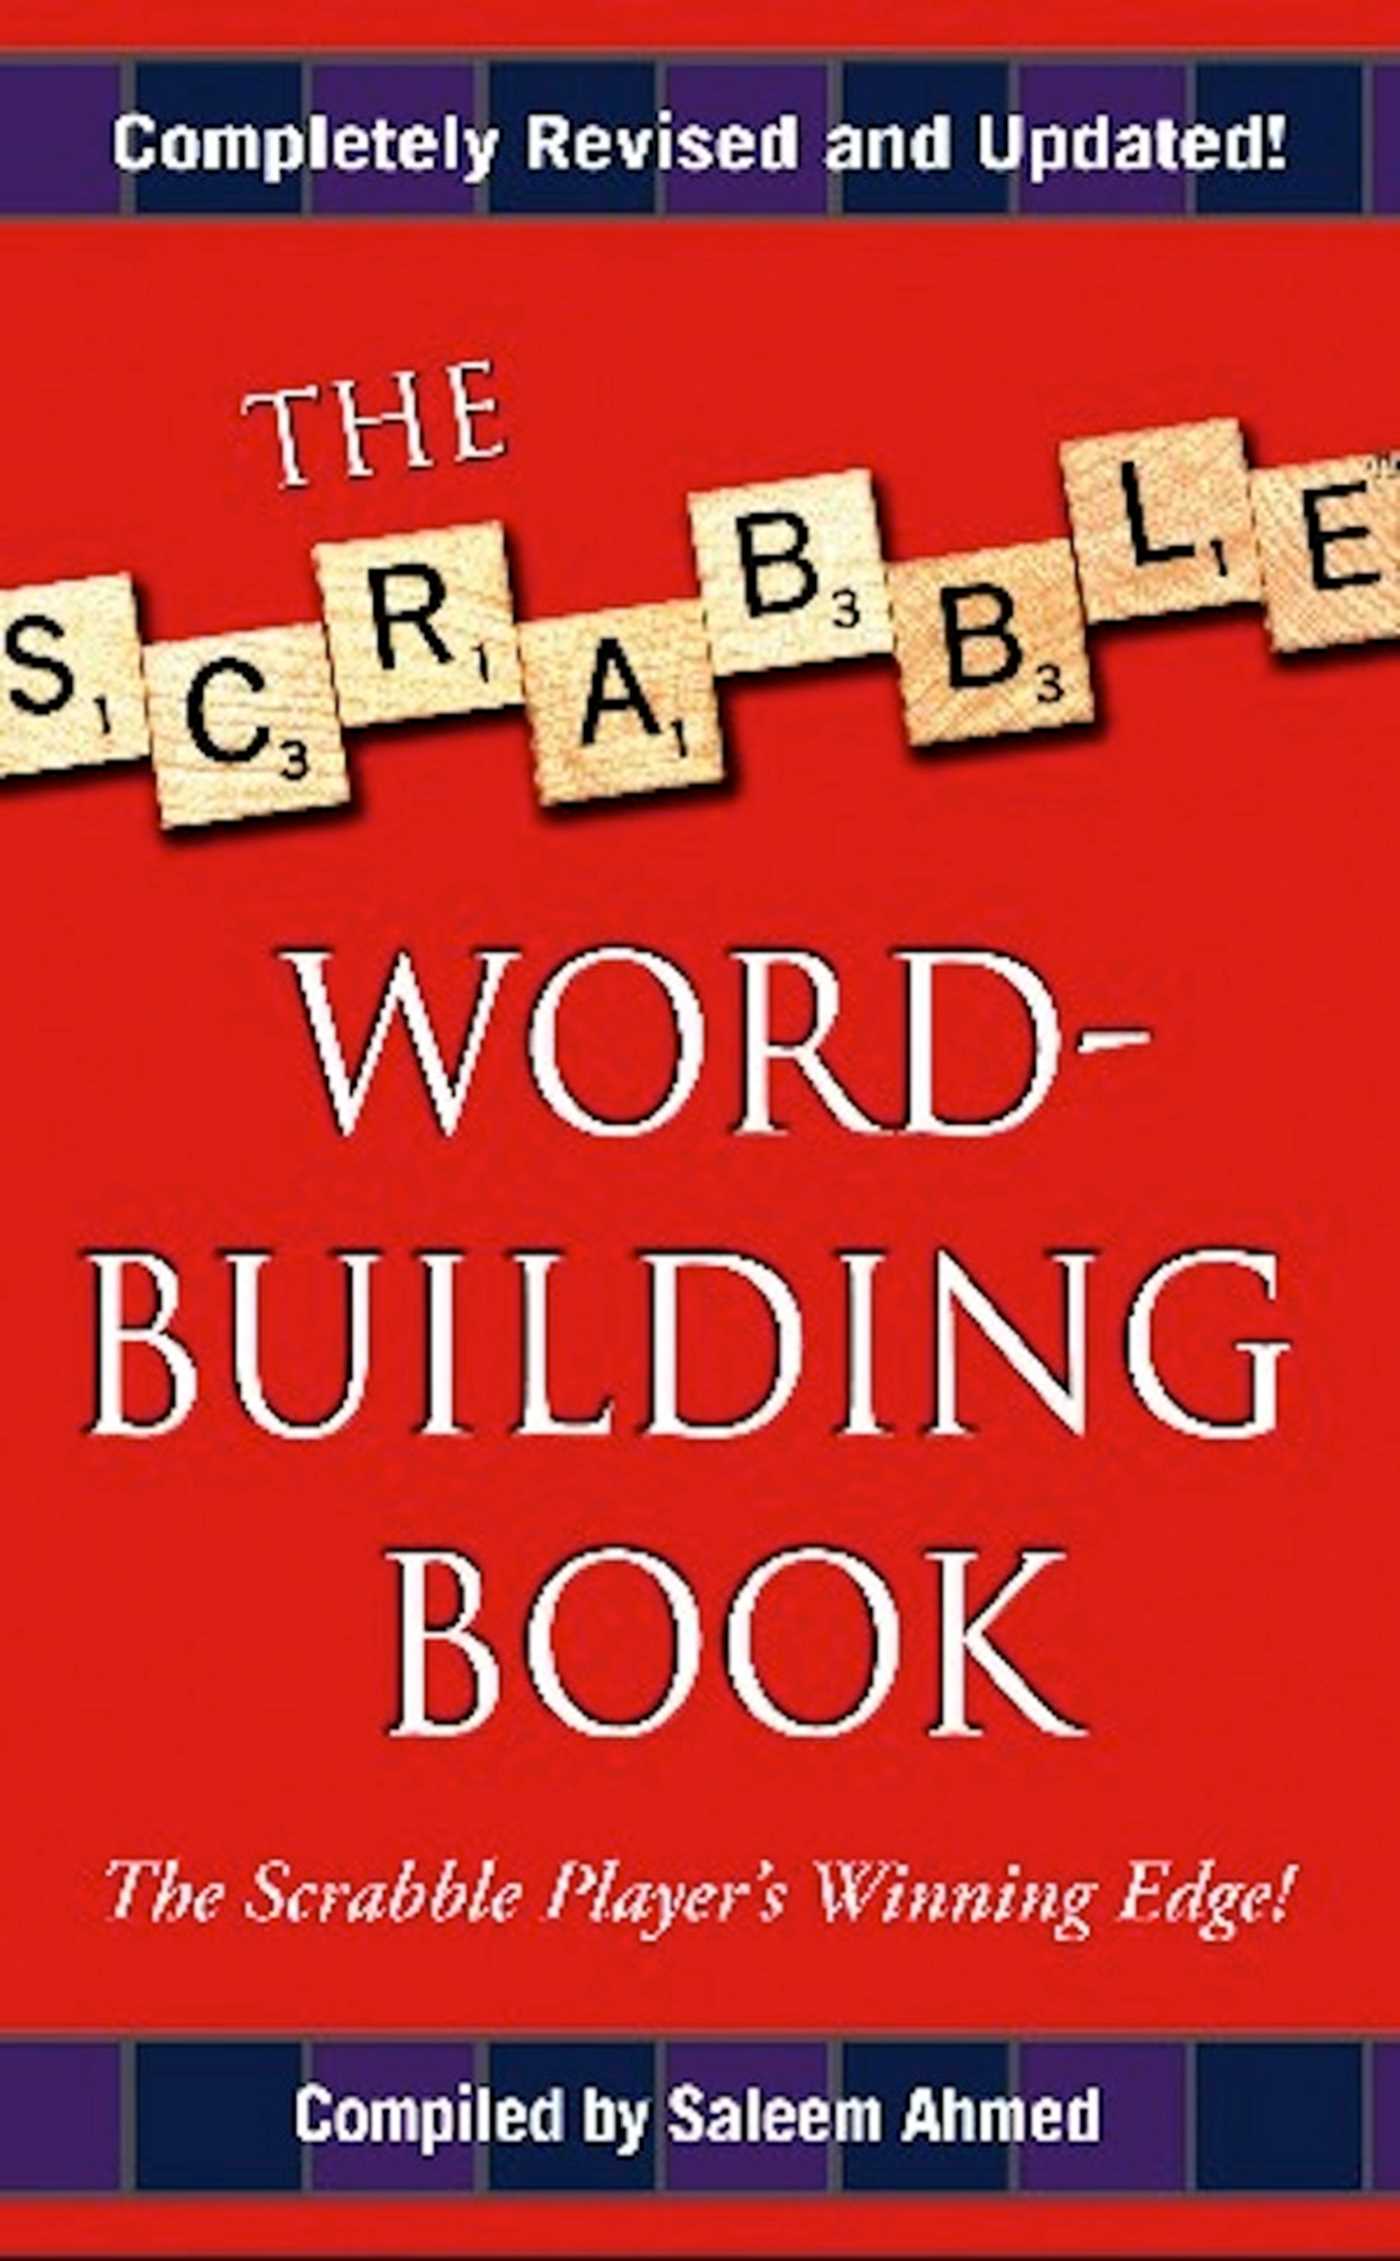 Built книга. Words and buildings. Grumpy Word building. Vocabulary Builder book. Book update